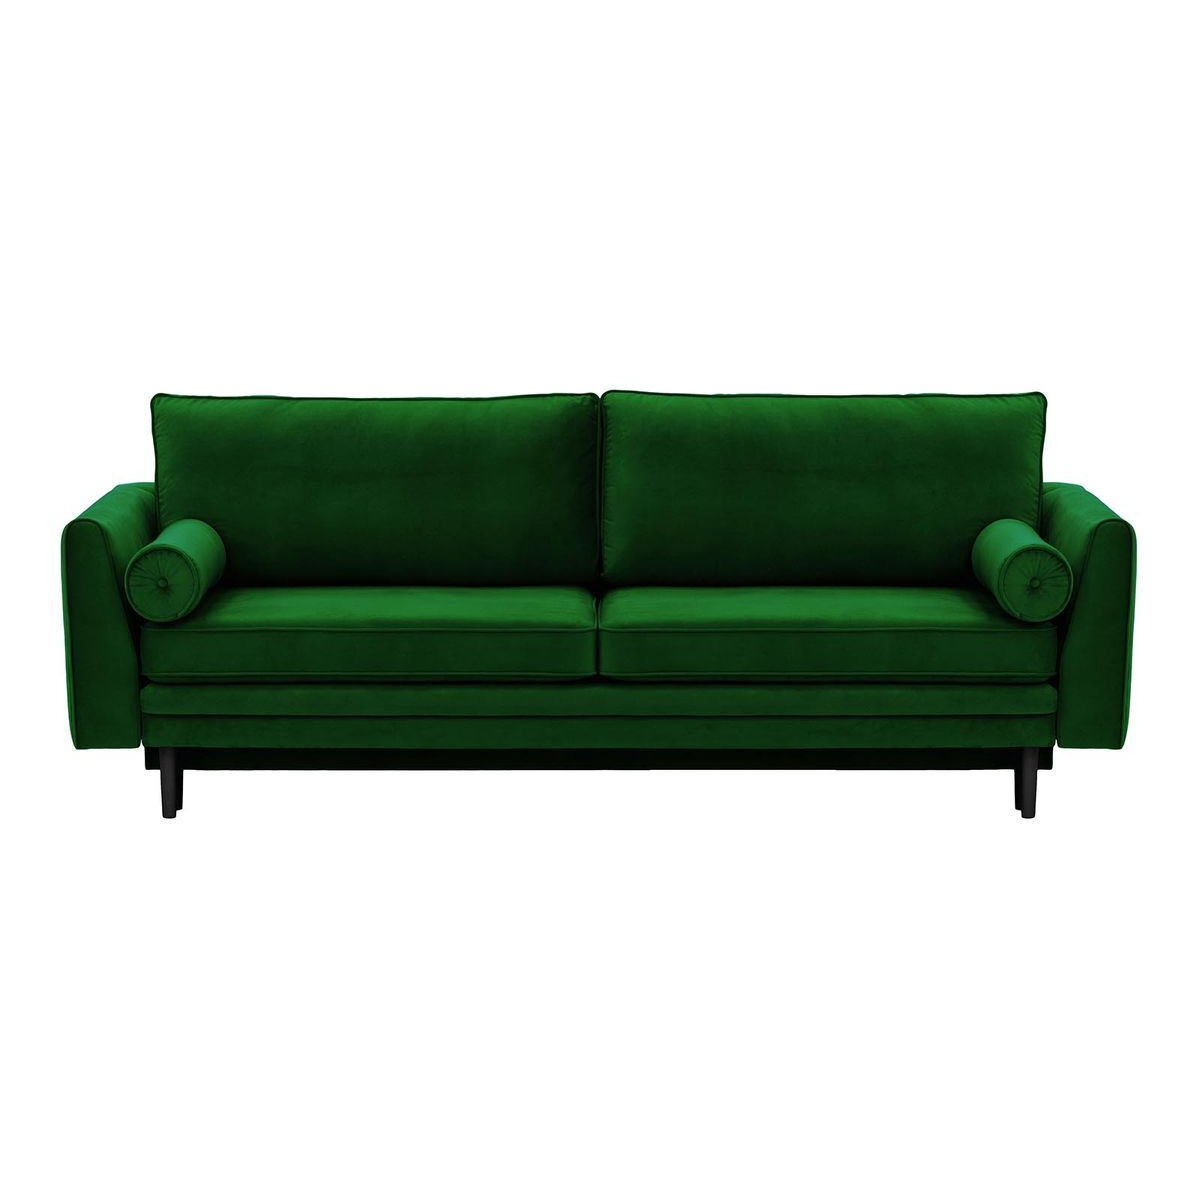 Cornelia Sofa Bed with Storage, dark green, Leg colour: black - image 1